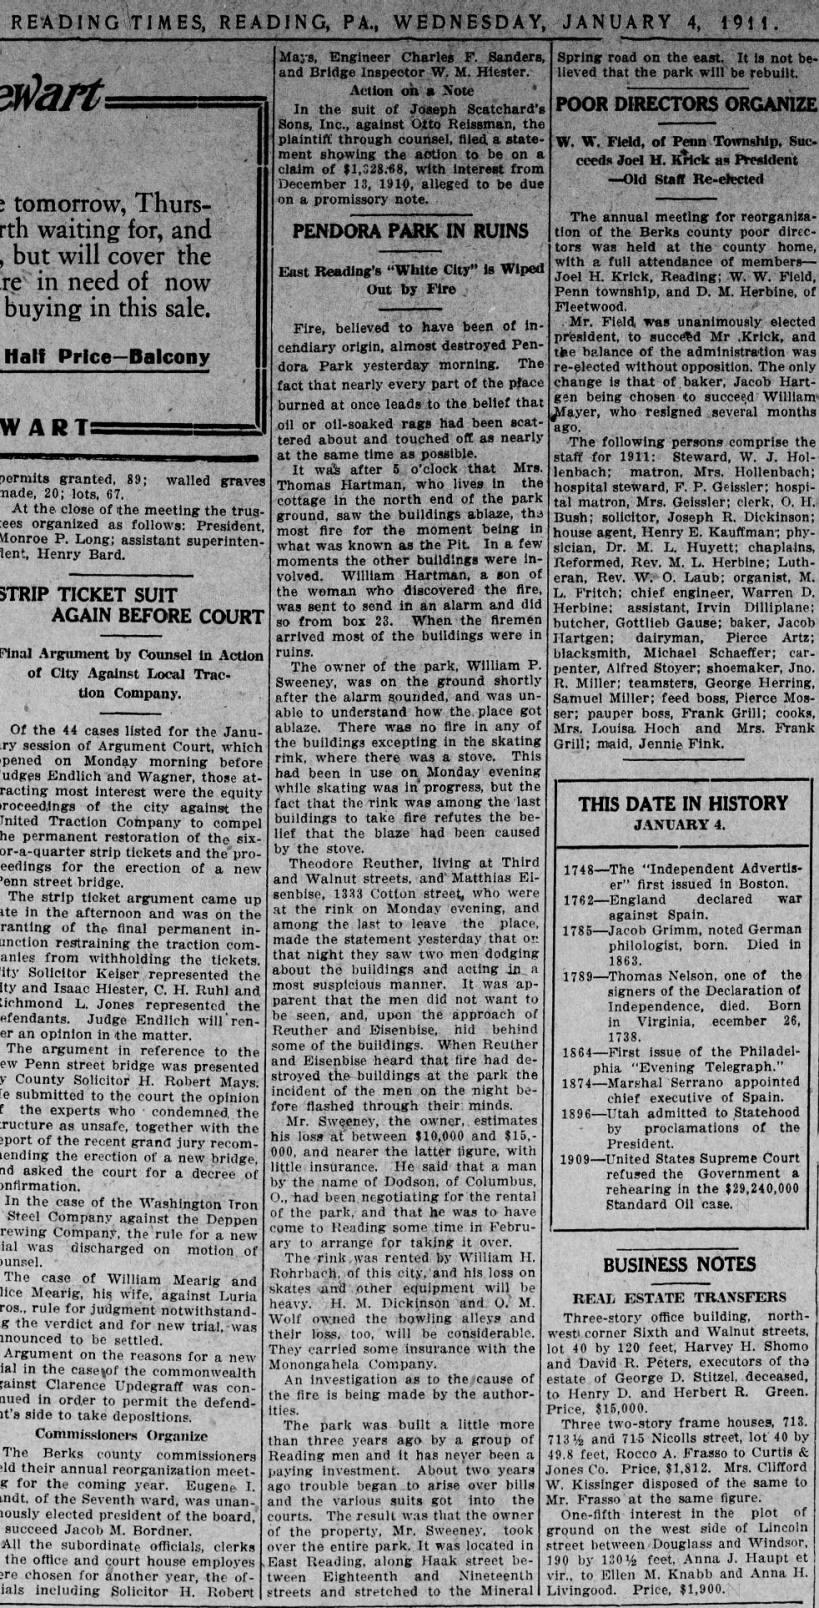 Fire 1911 Times 1-4